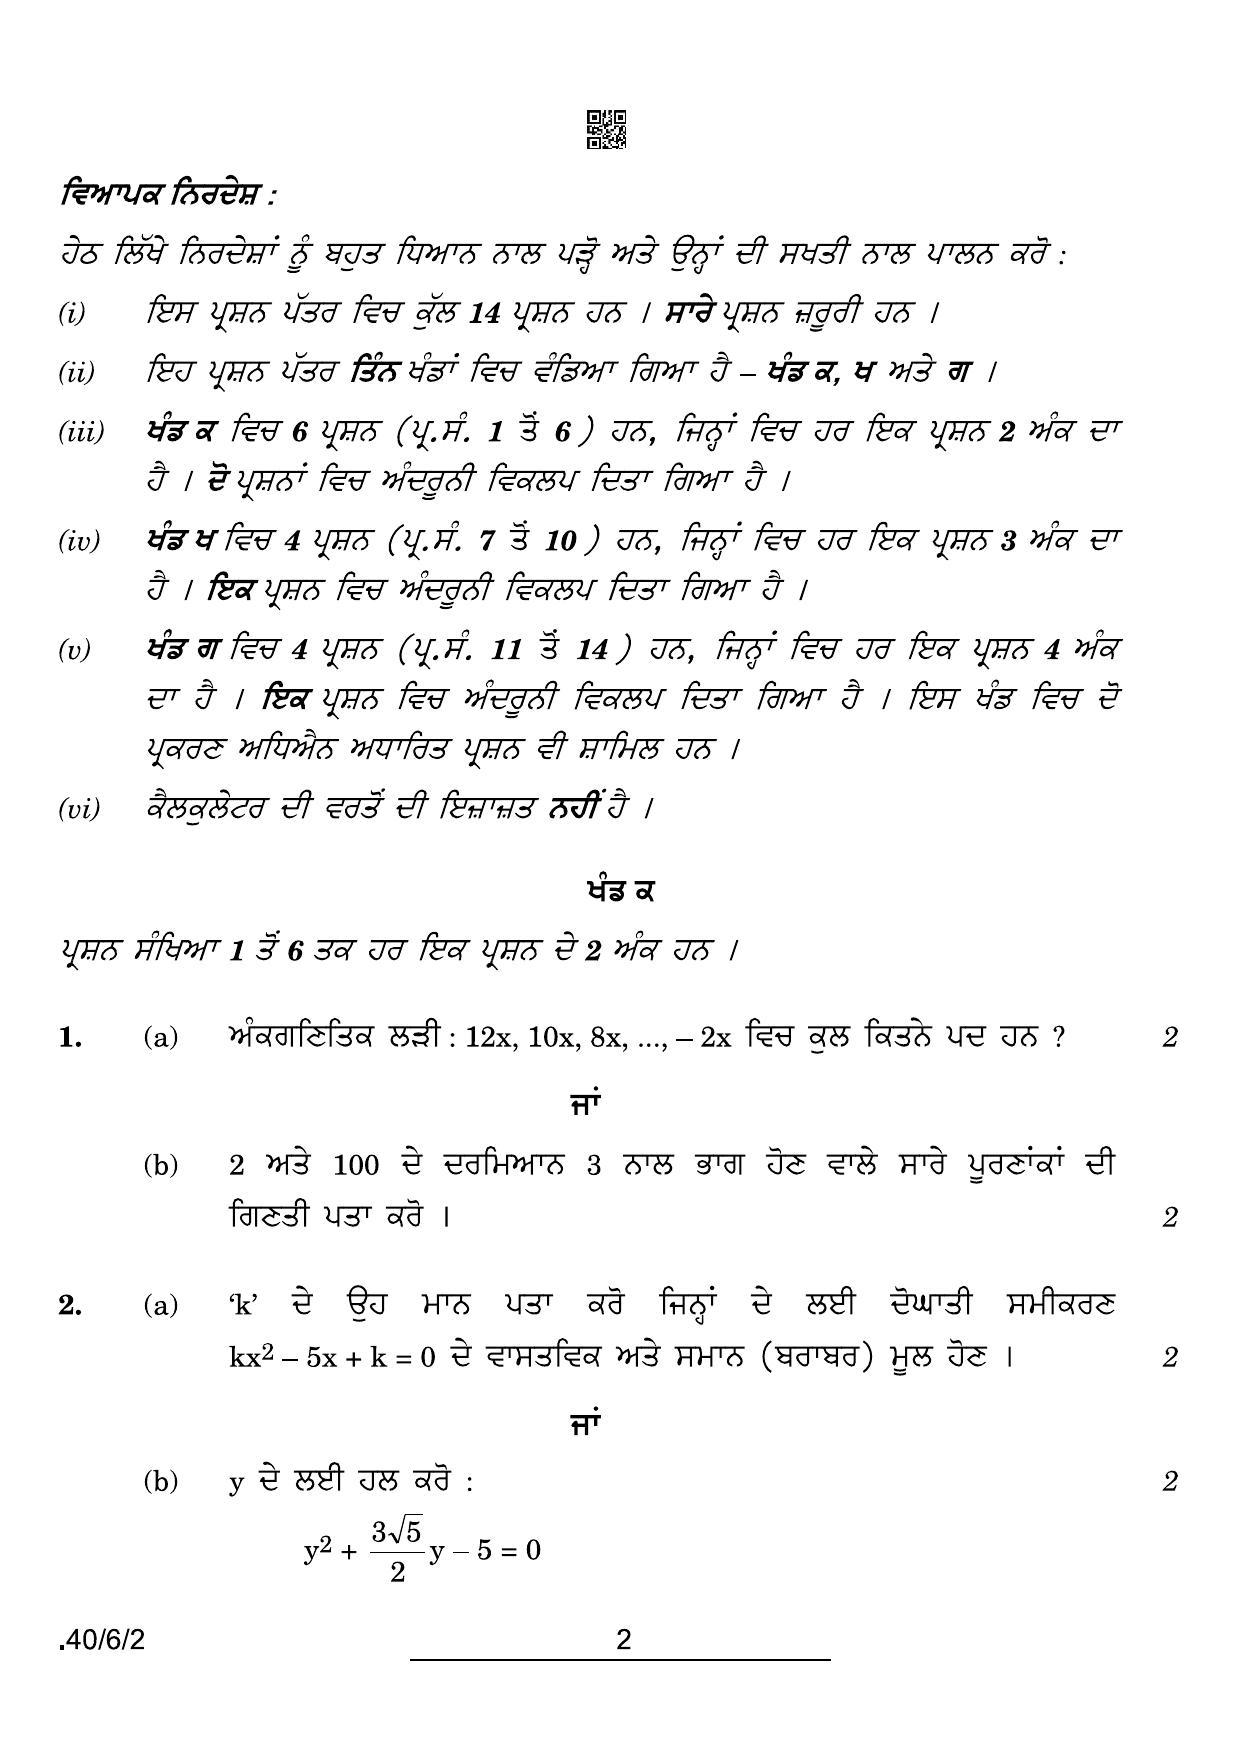 CBSE Class 10 40-6-2 Maths Std Punjabi 2022 Compartment Question Paper - Page 2